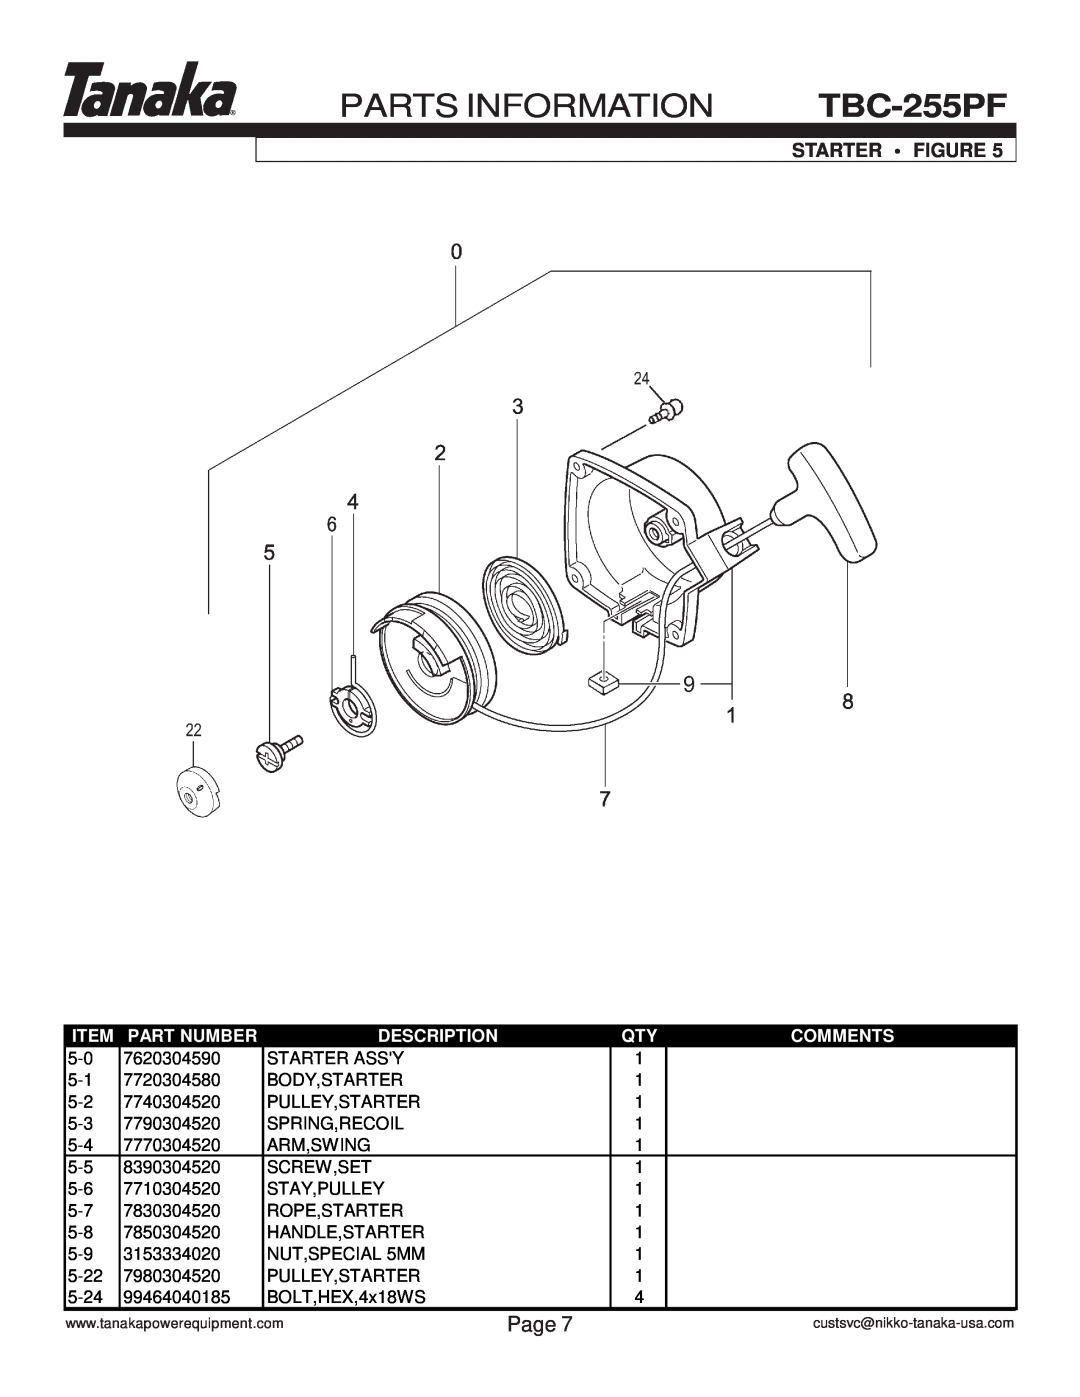 Tanaka TBC-255PF manual Starter Figure, Parts Information, Page, Part Number, Description, Comments 